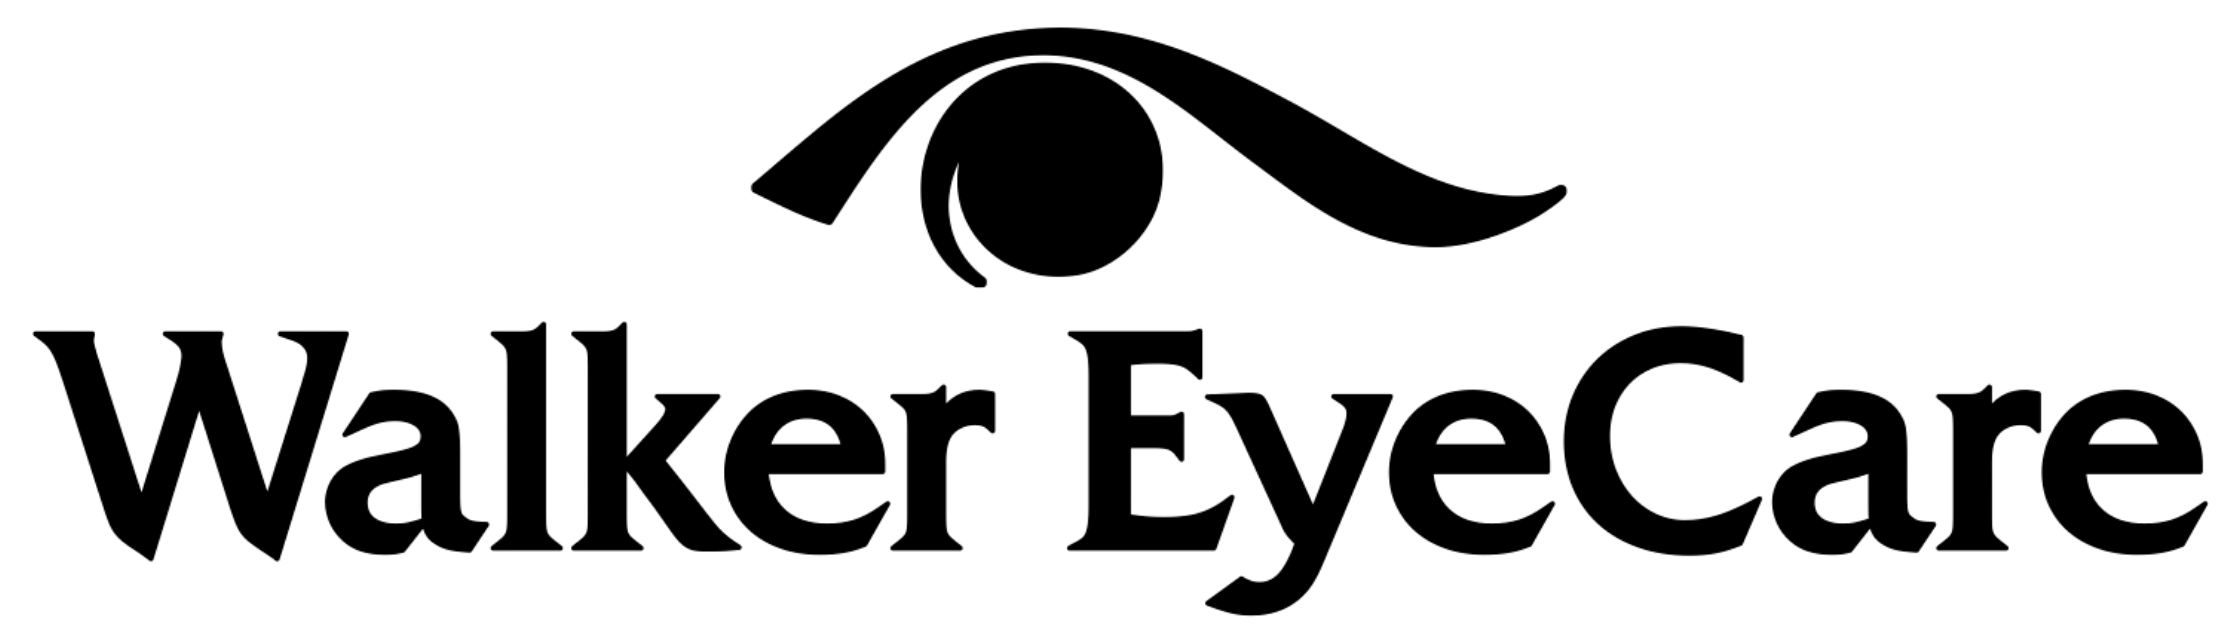 Walker Eye Care Logo